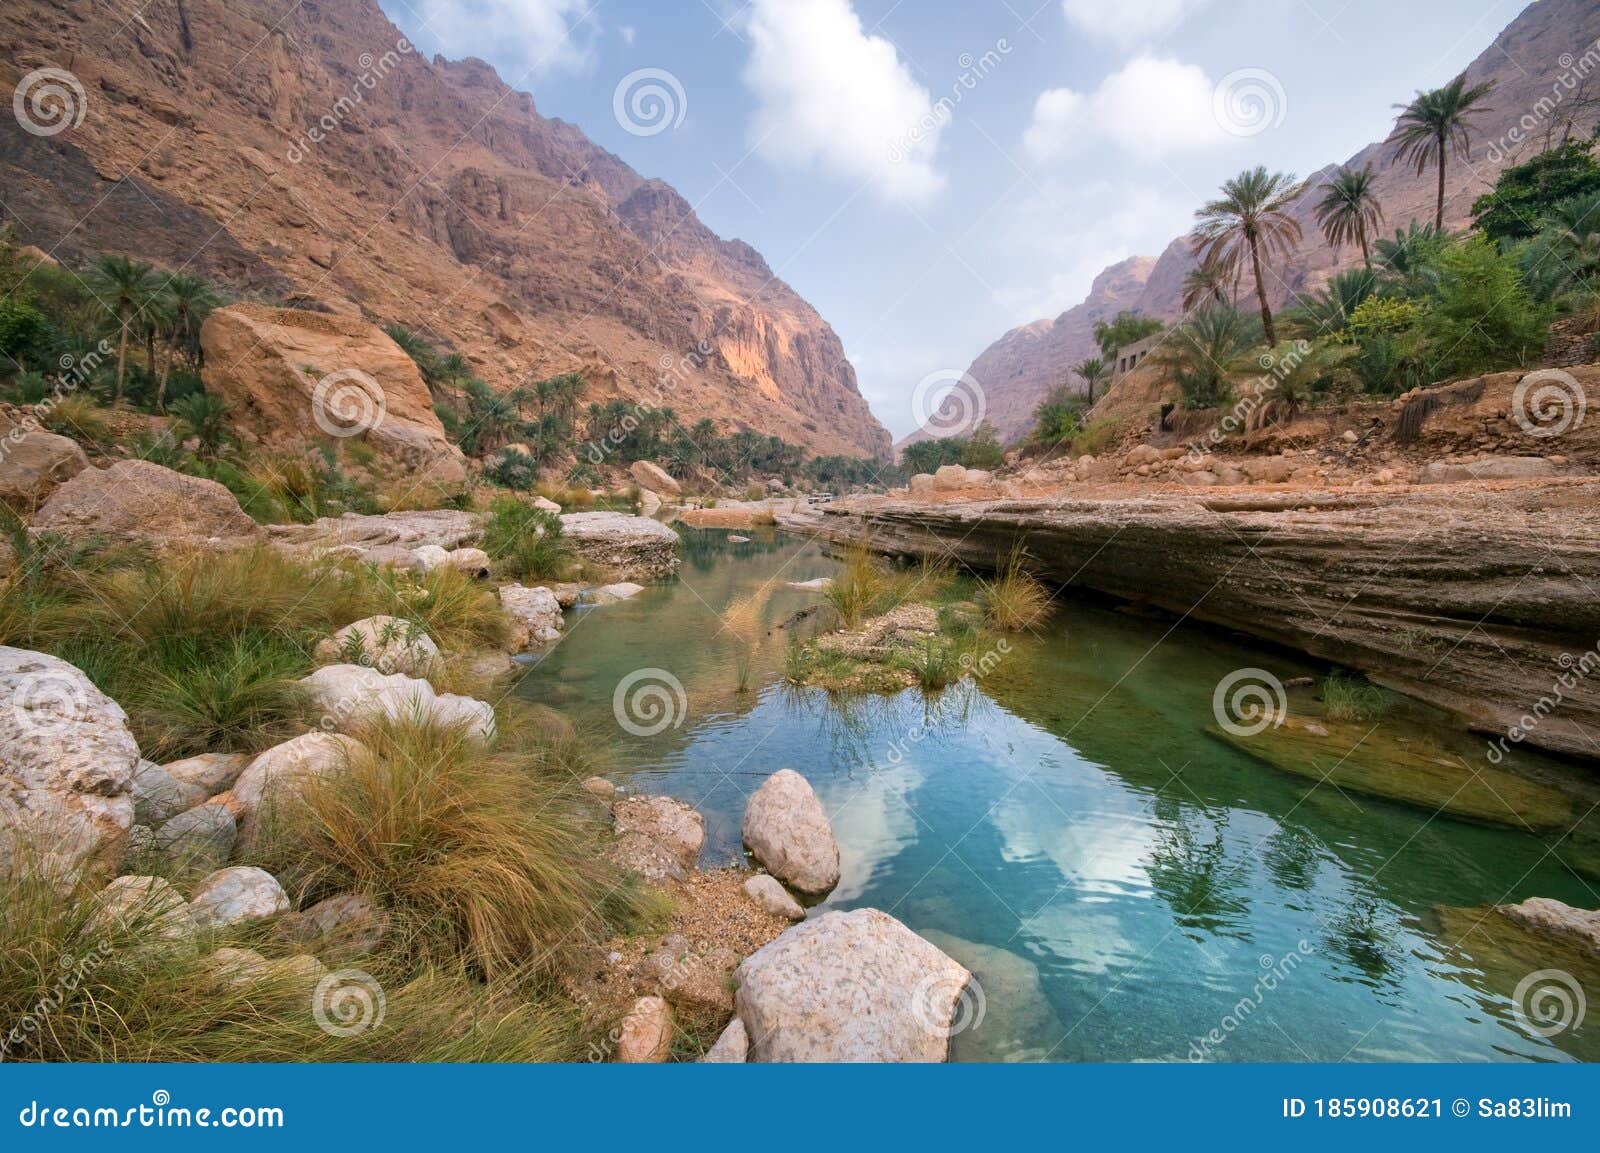 landscape of wadi tiwi , oman